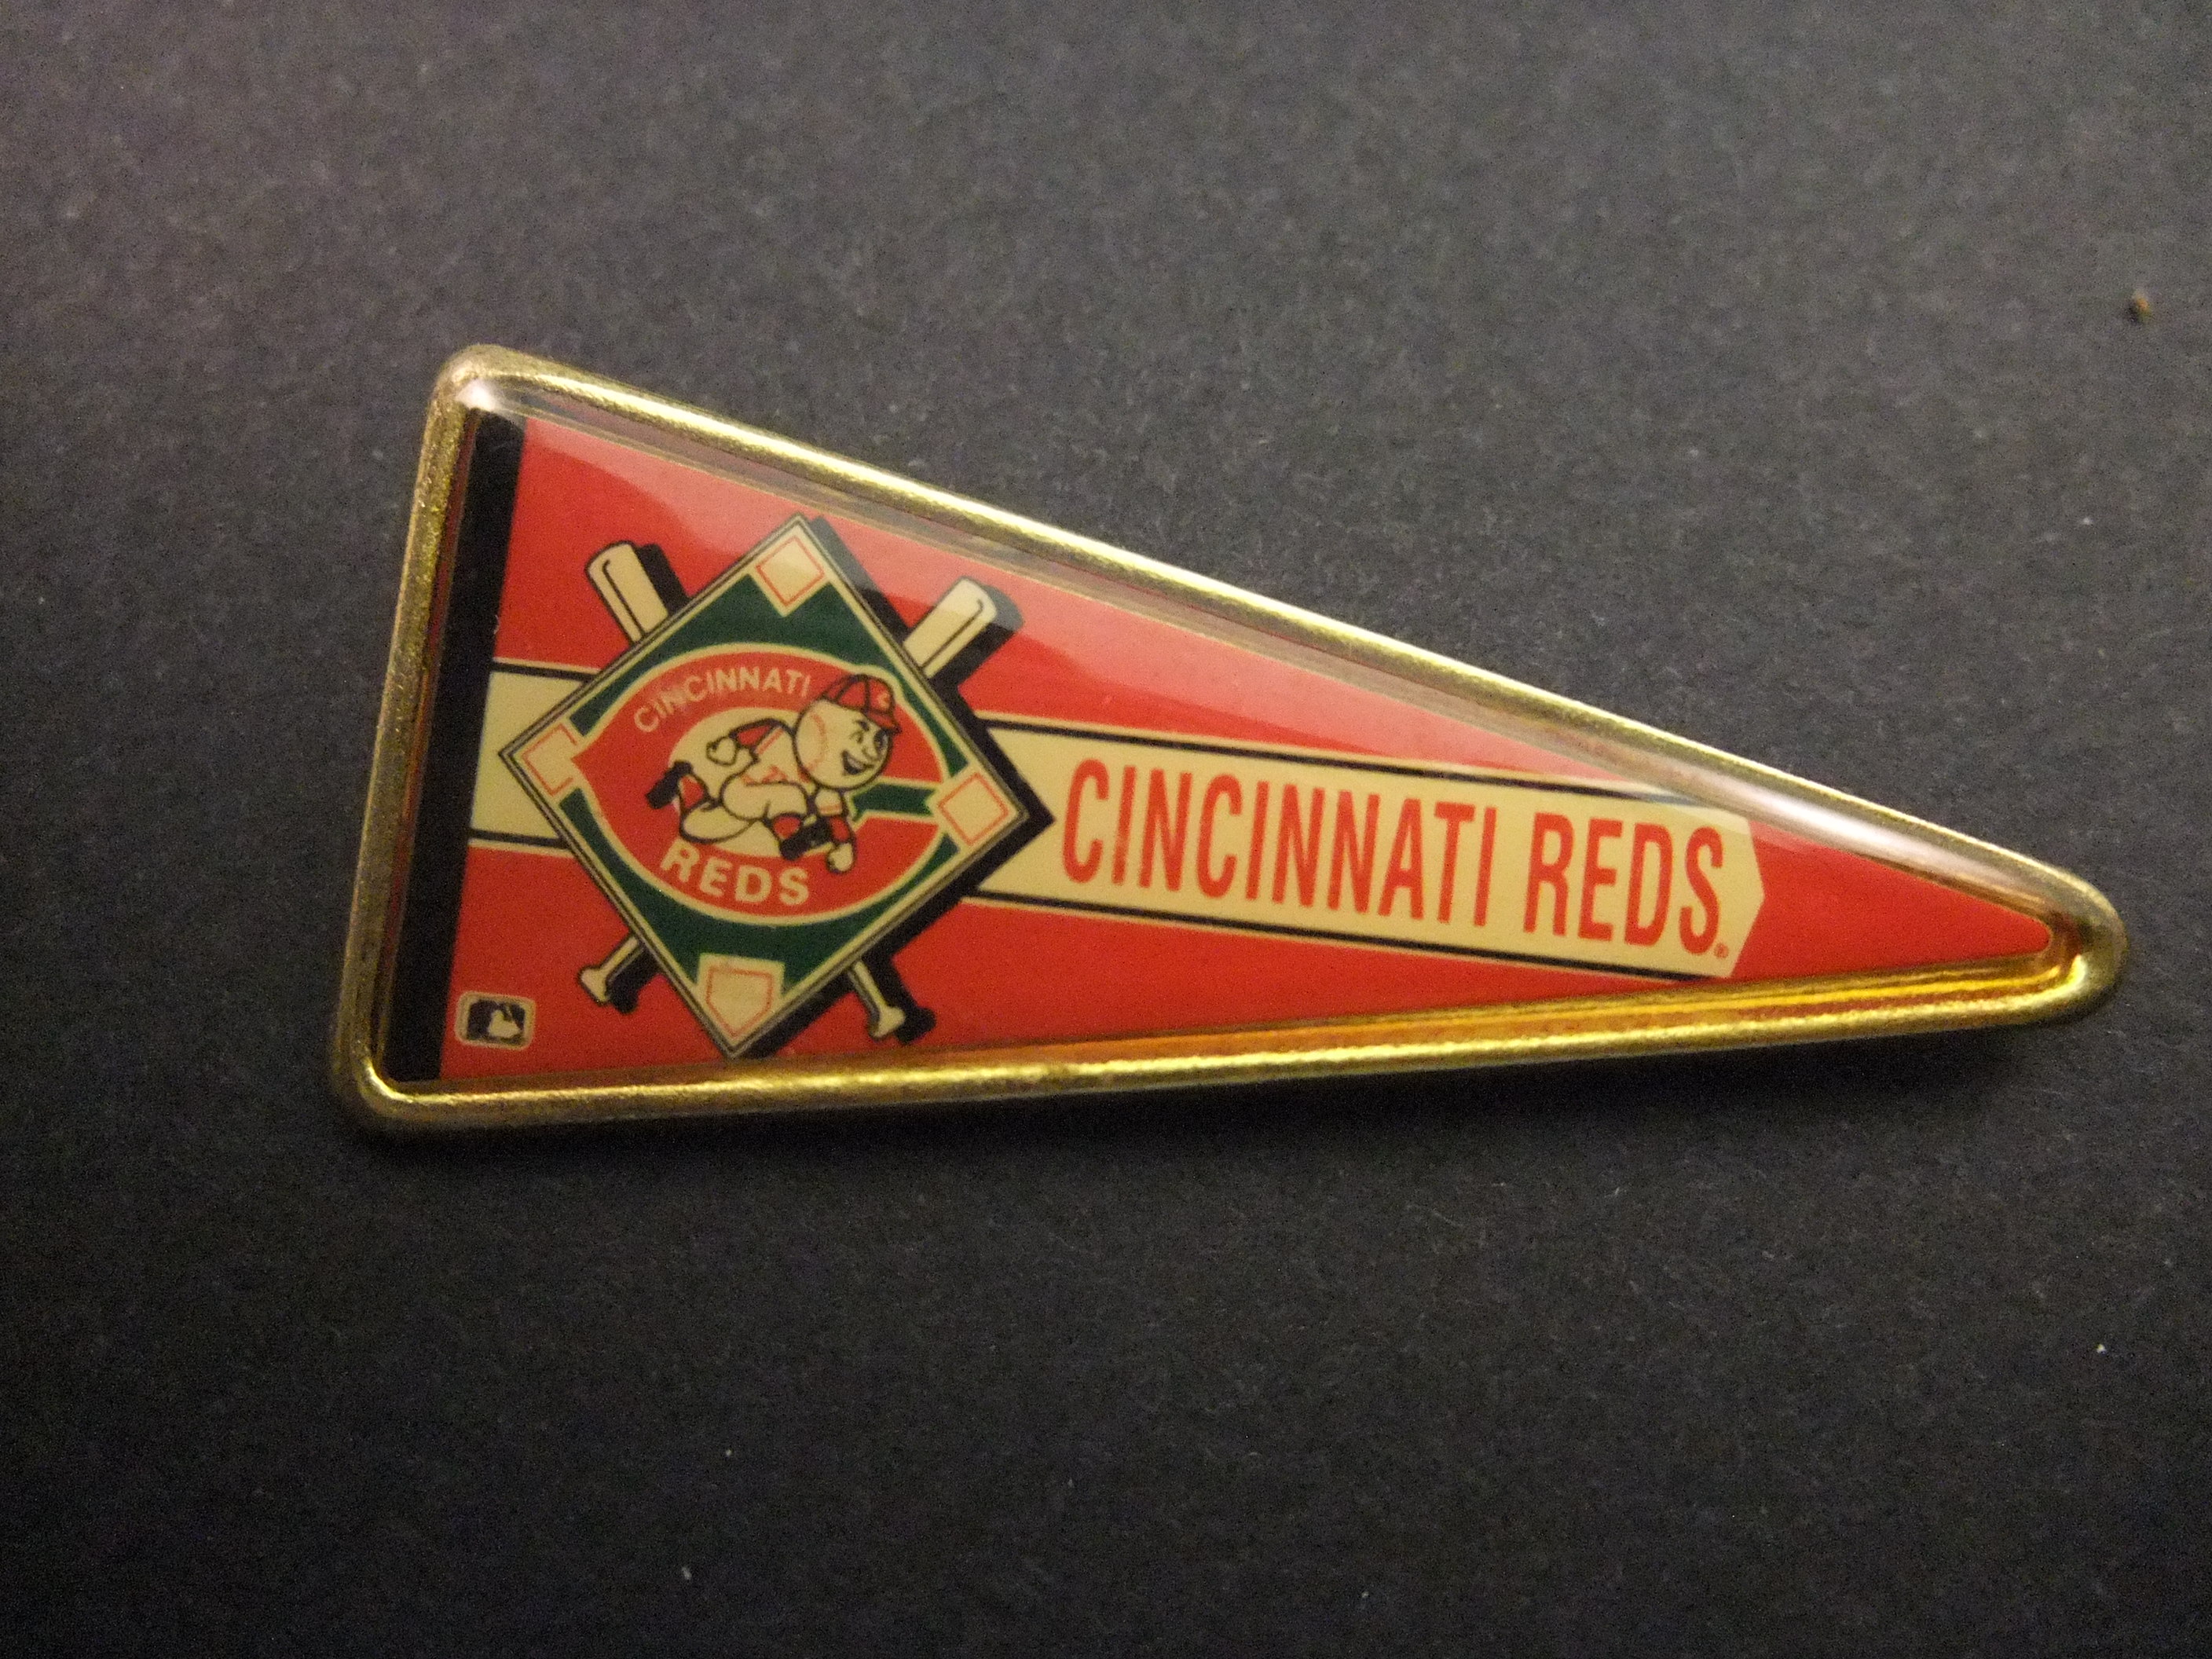 Cincinnati Reds Major League baseball team